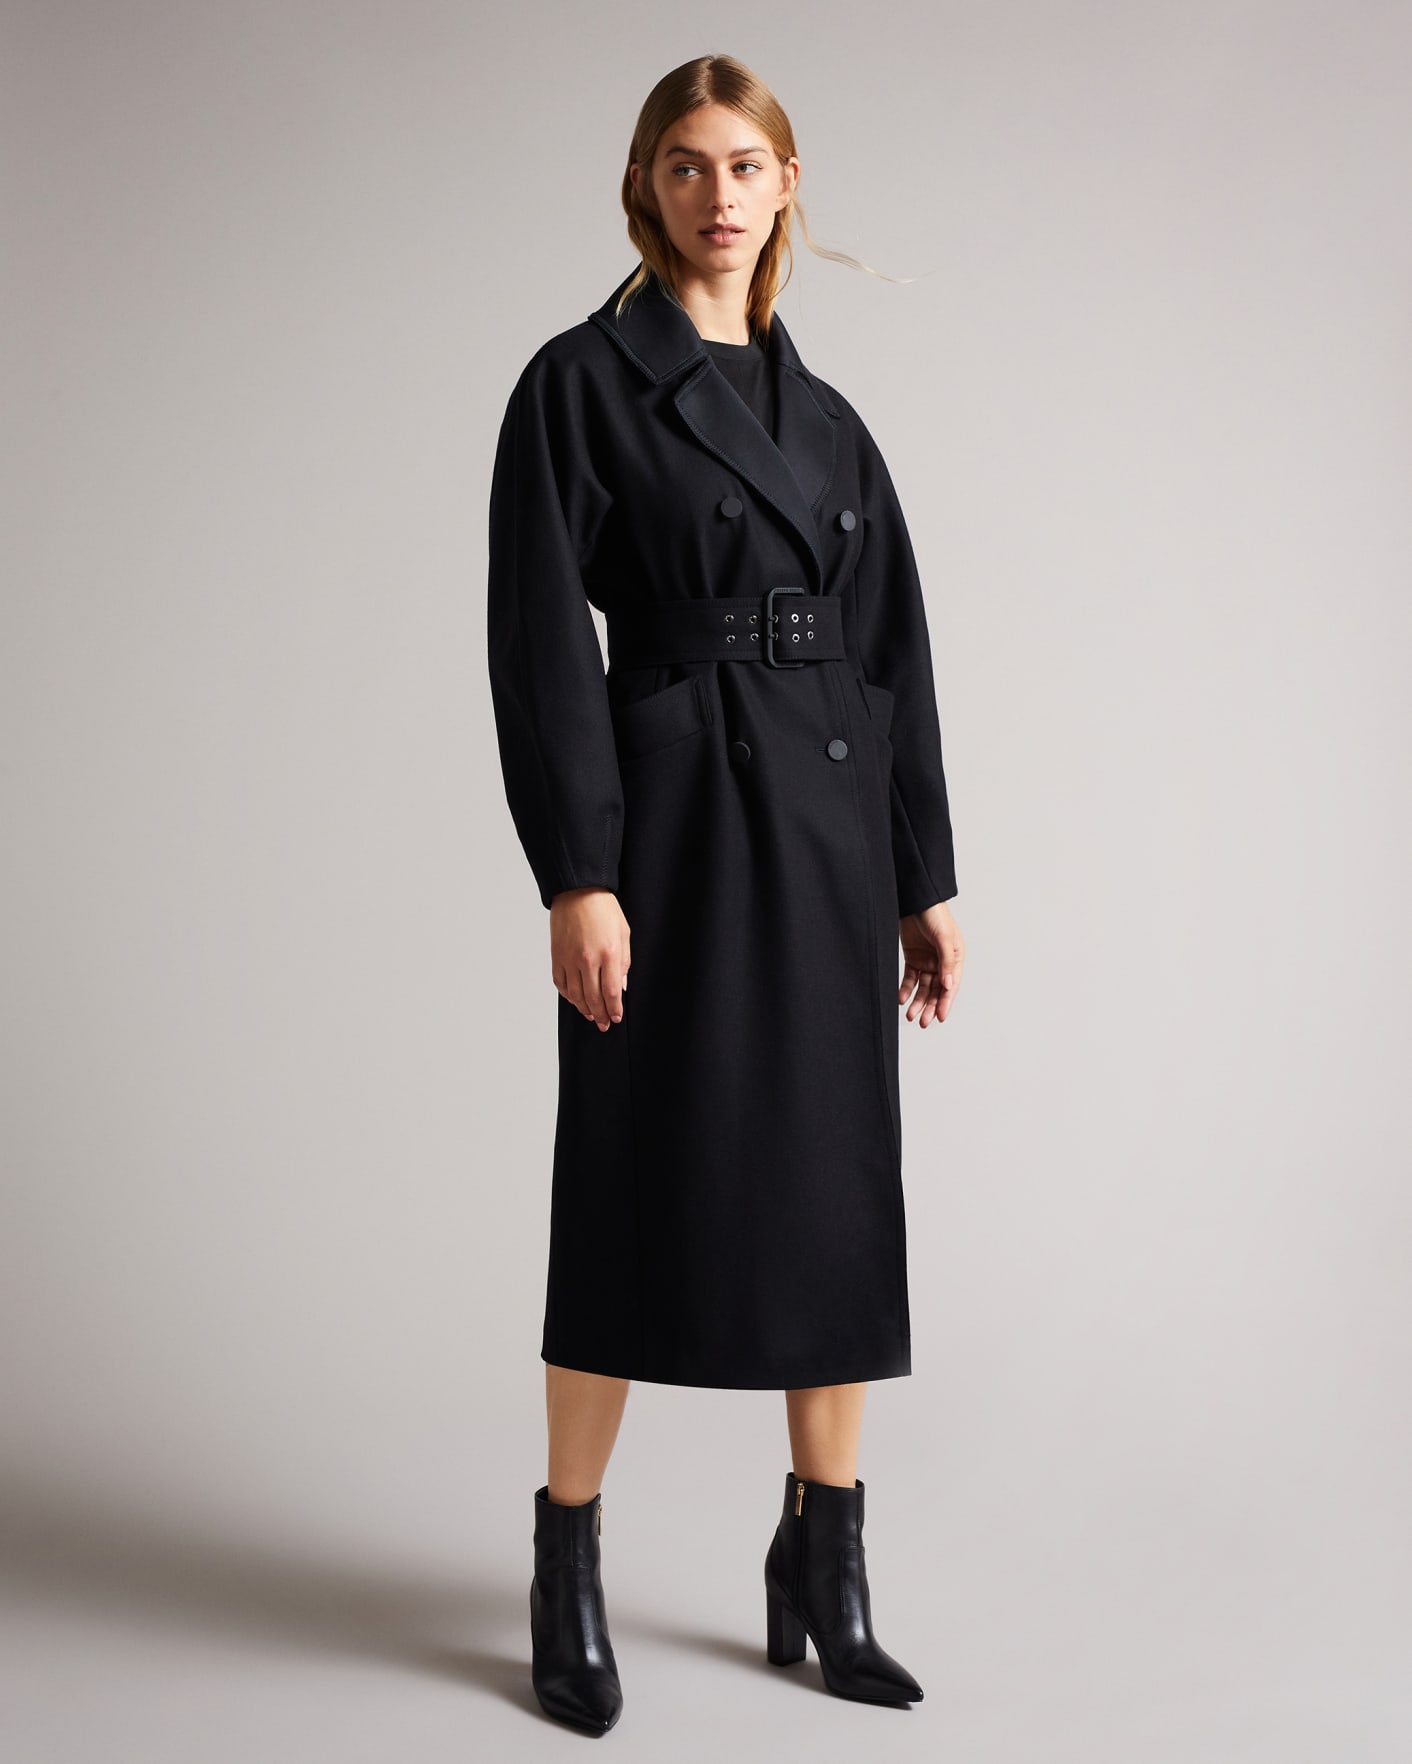 JANNEE BLACK Coats & Jackets | Ted US